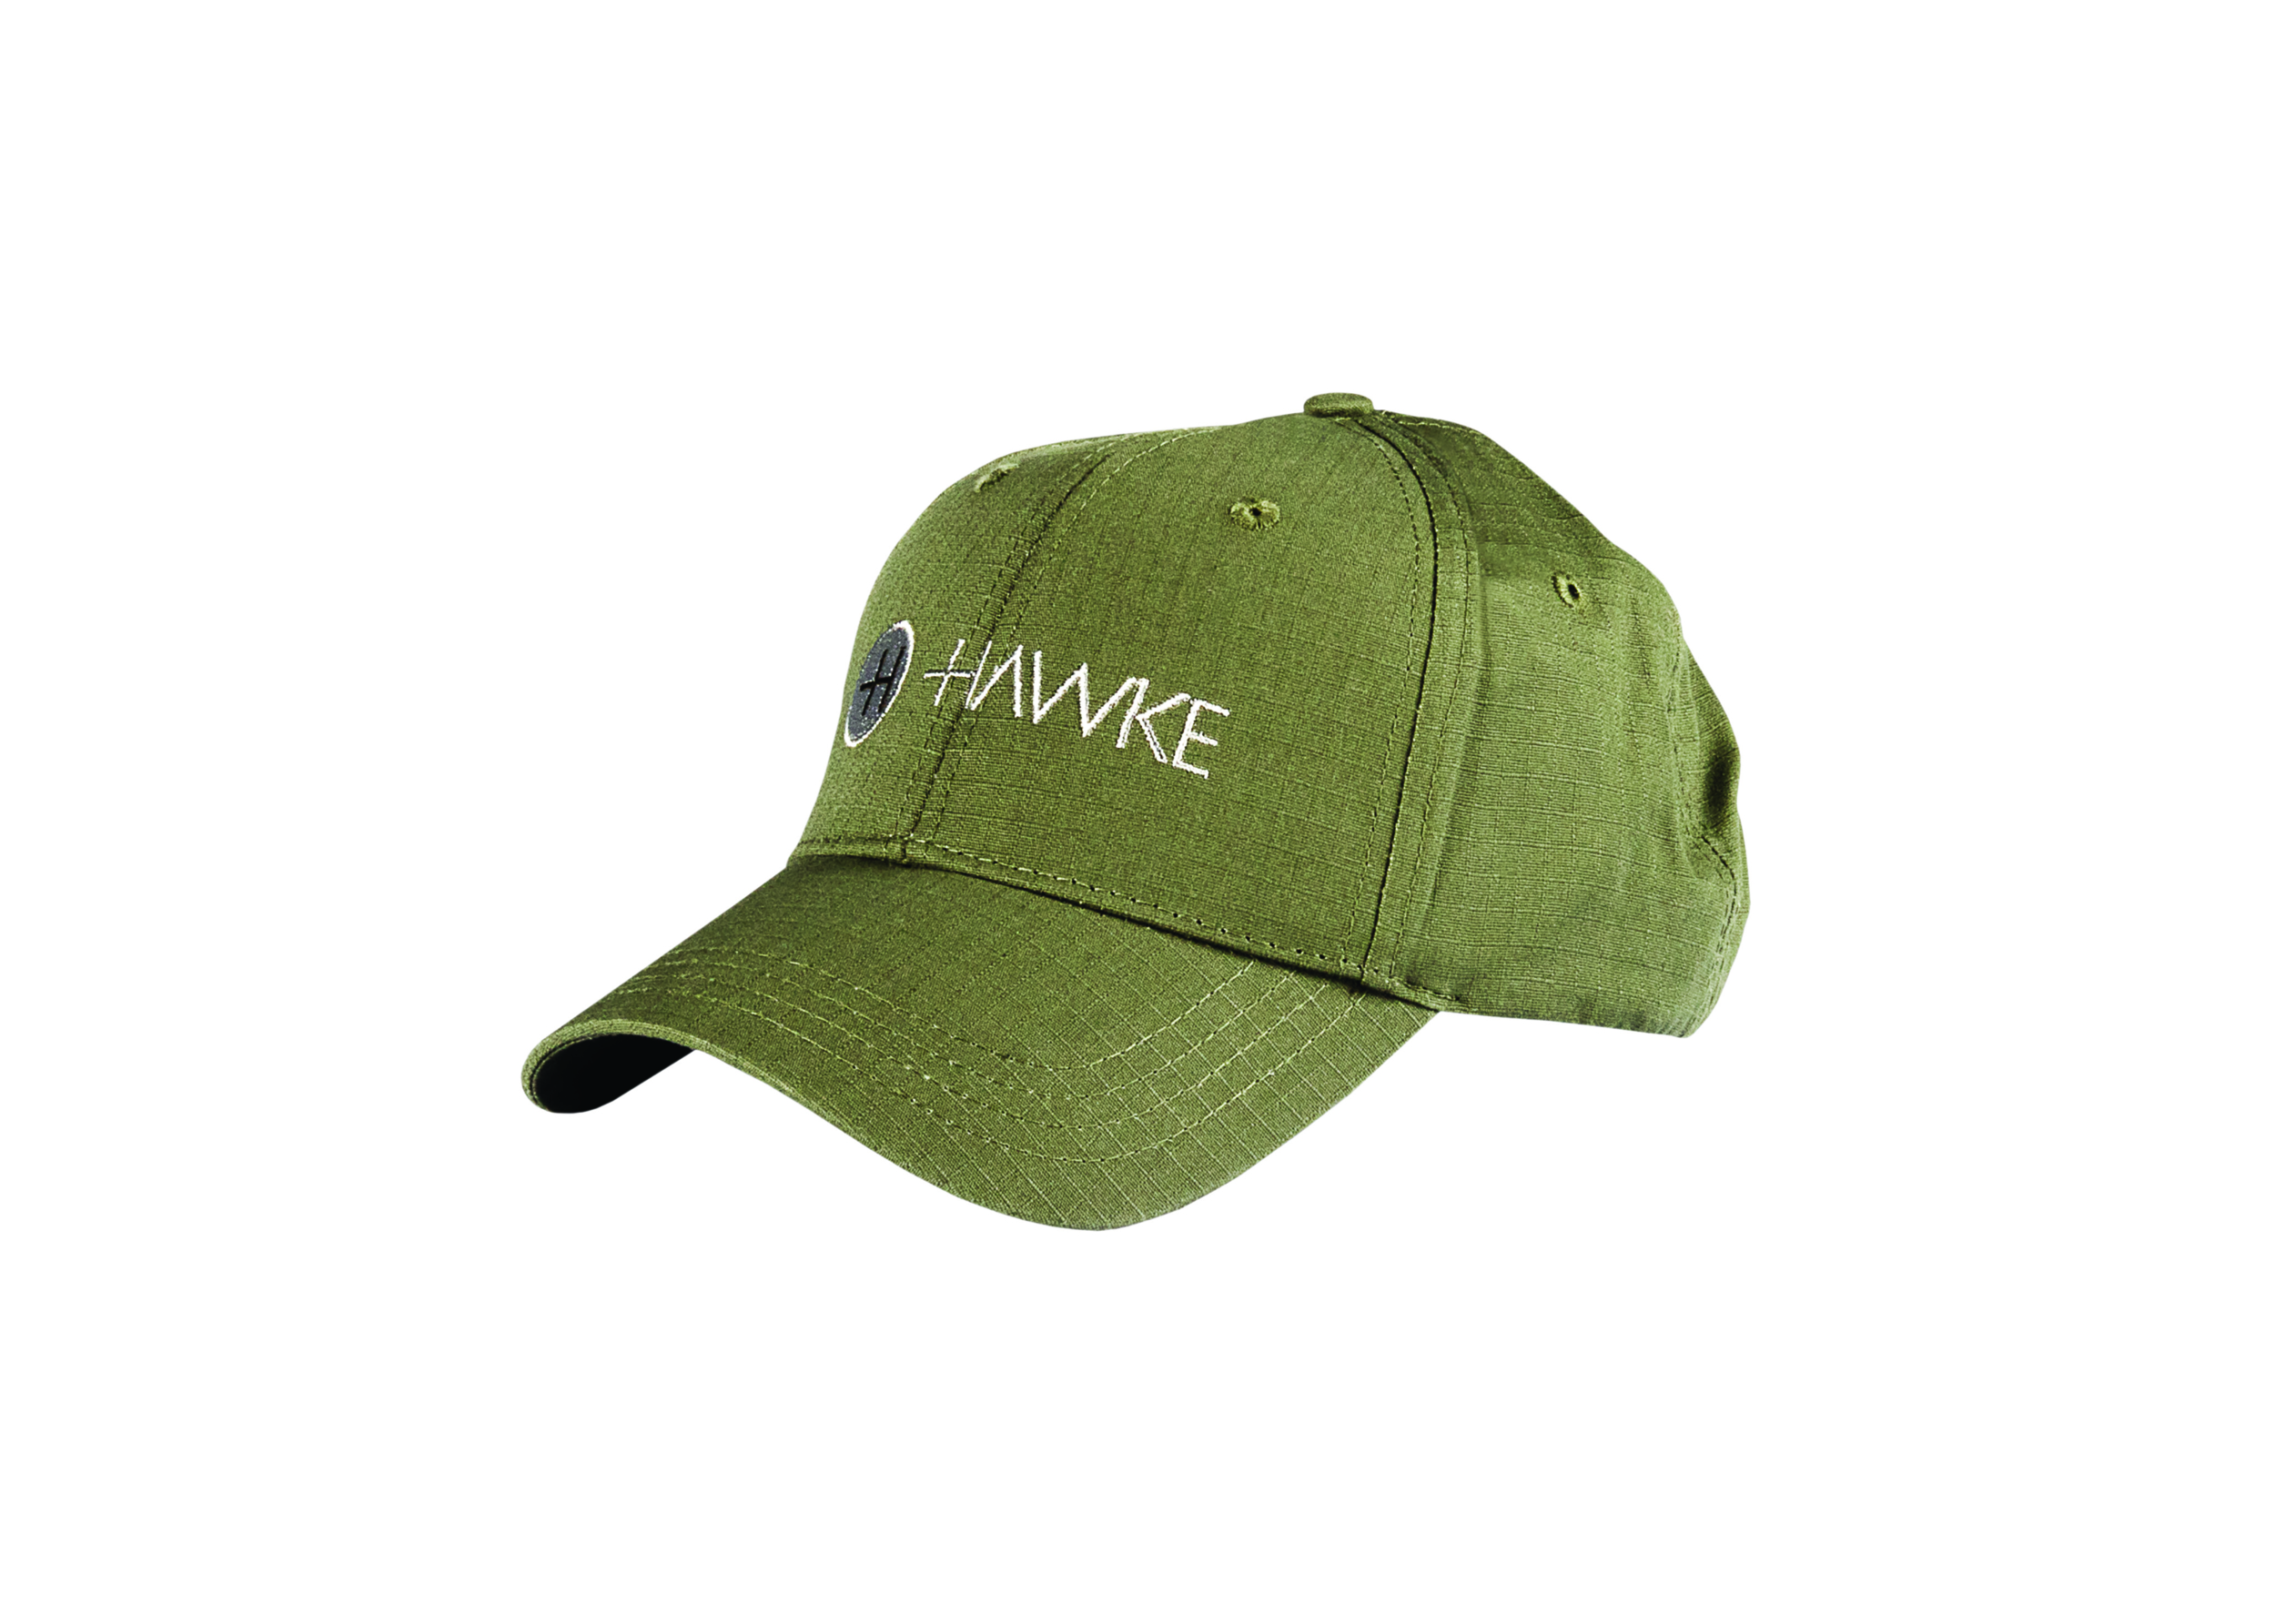 99360 – Green ripstop cap